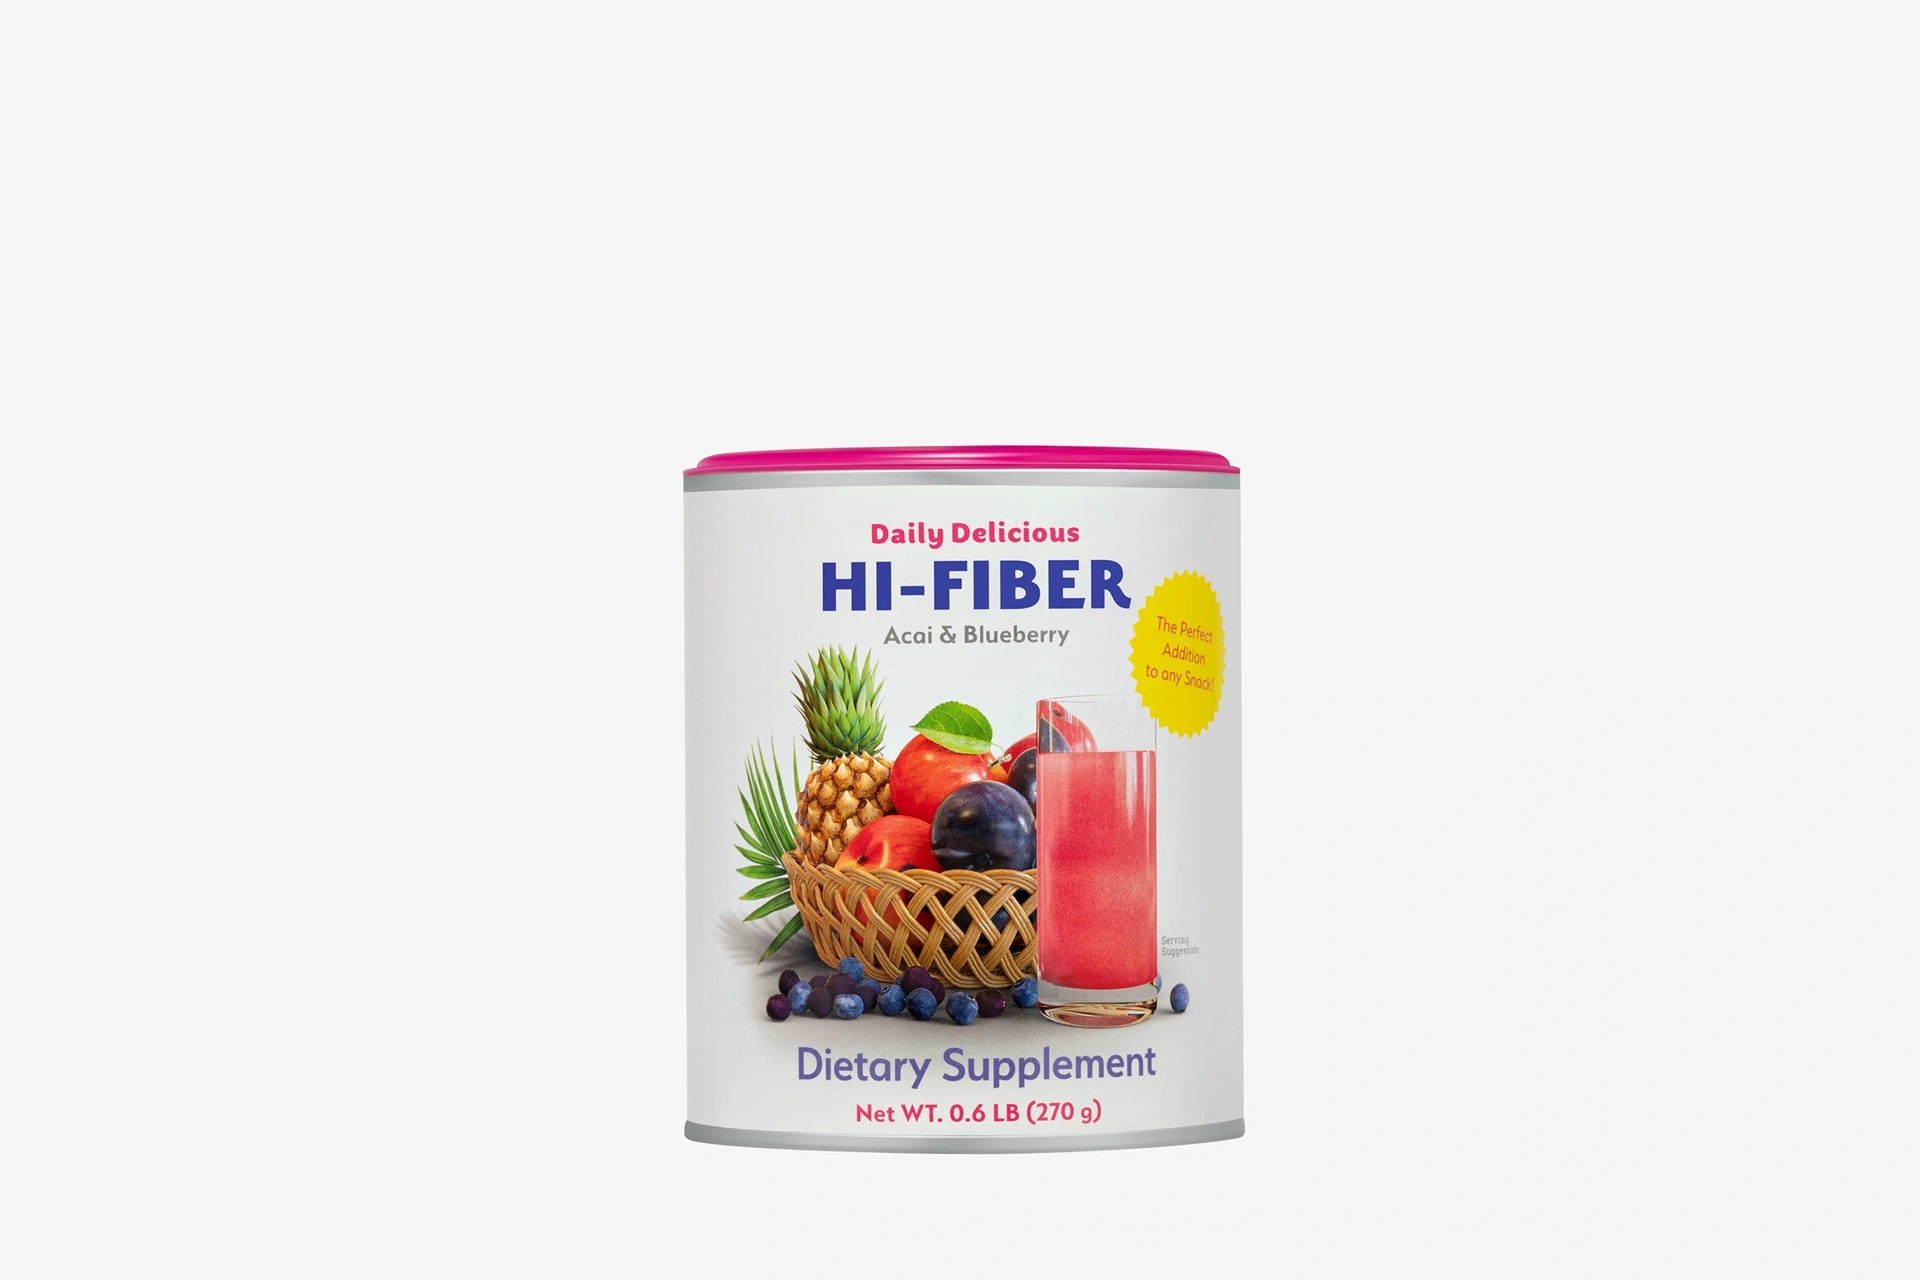 Daily Delicious Hi-Fiber Acai & Blueberry